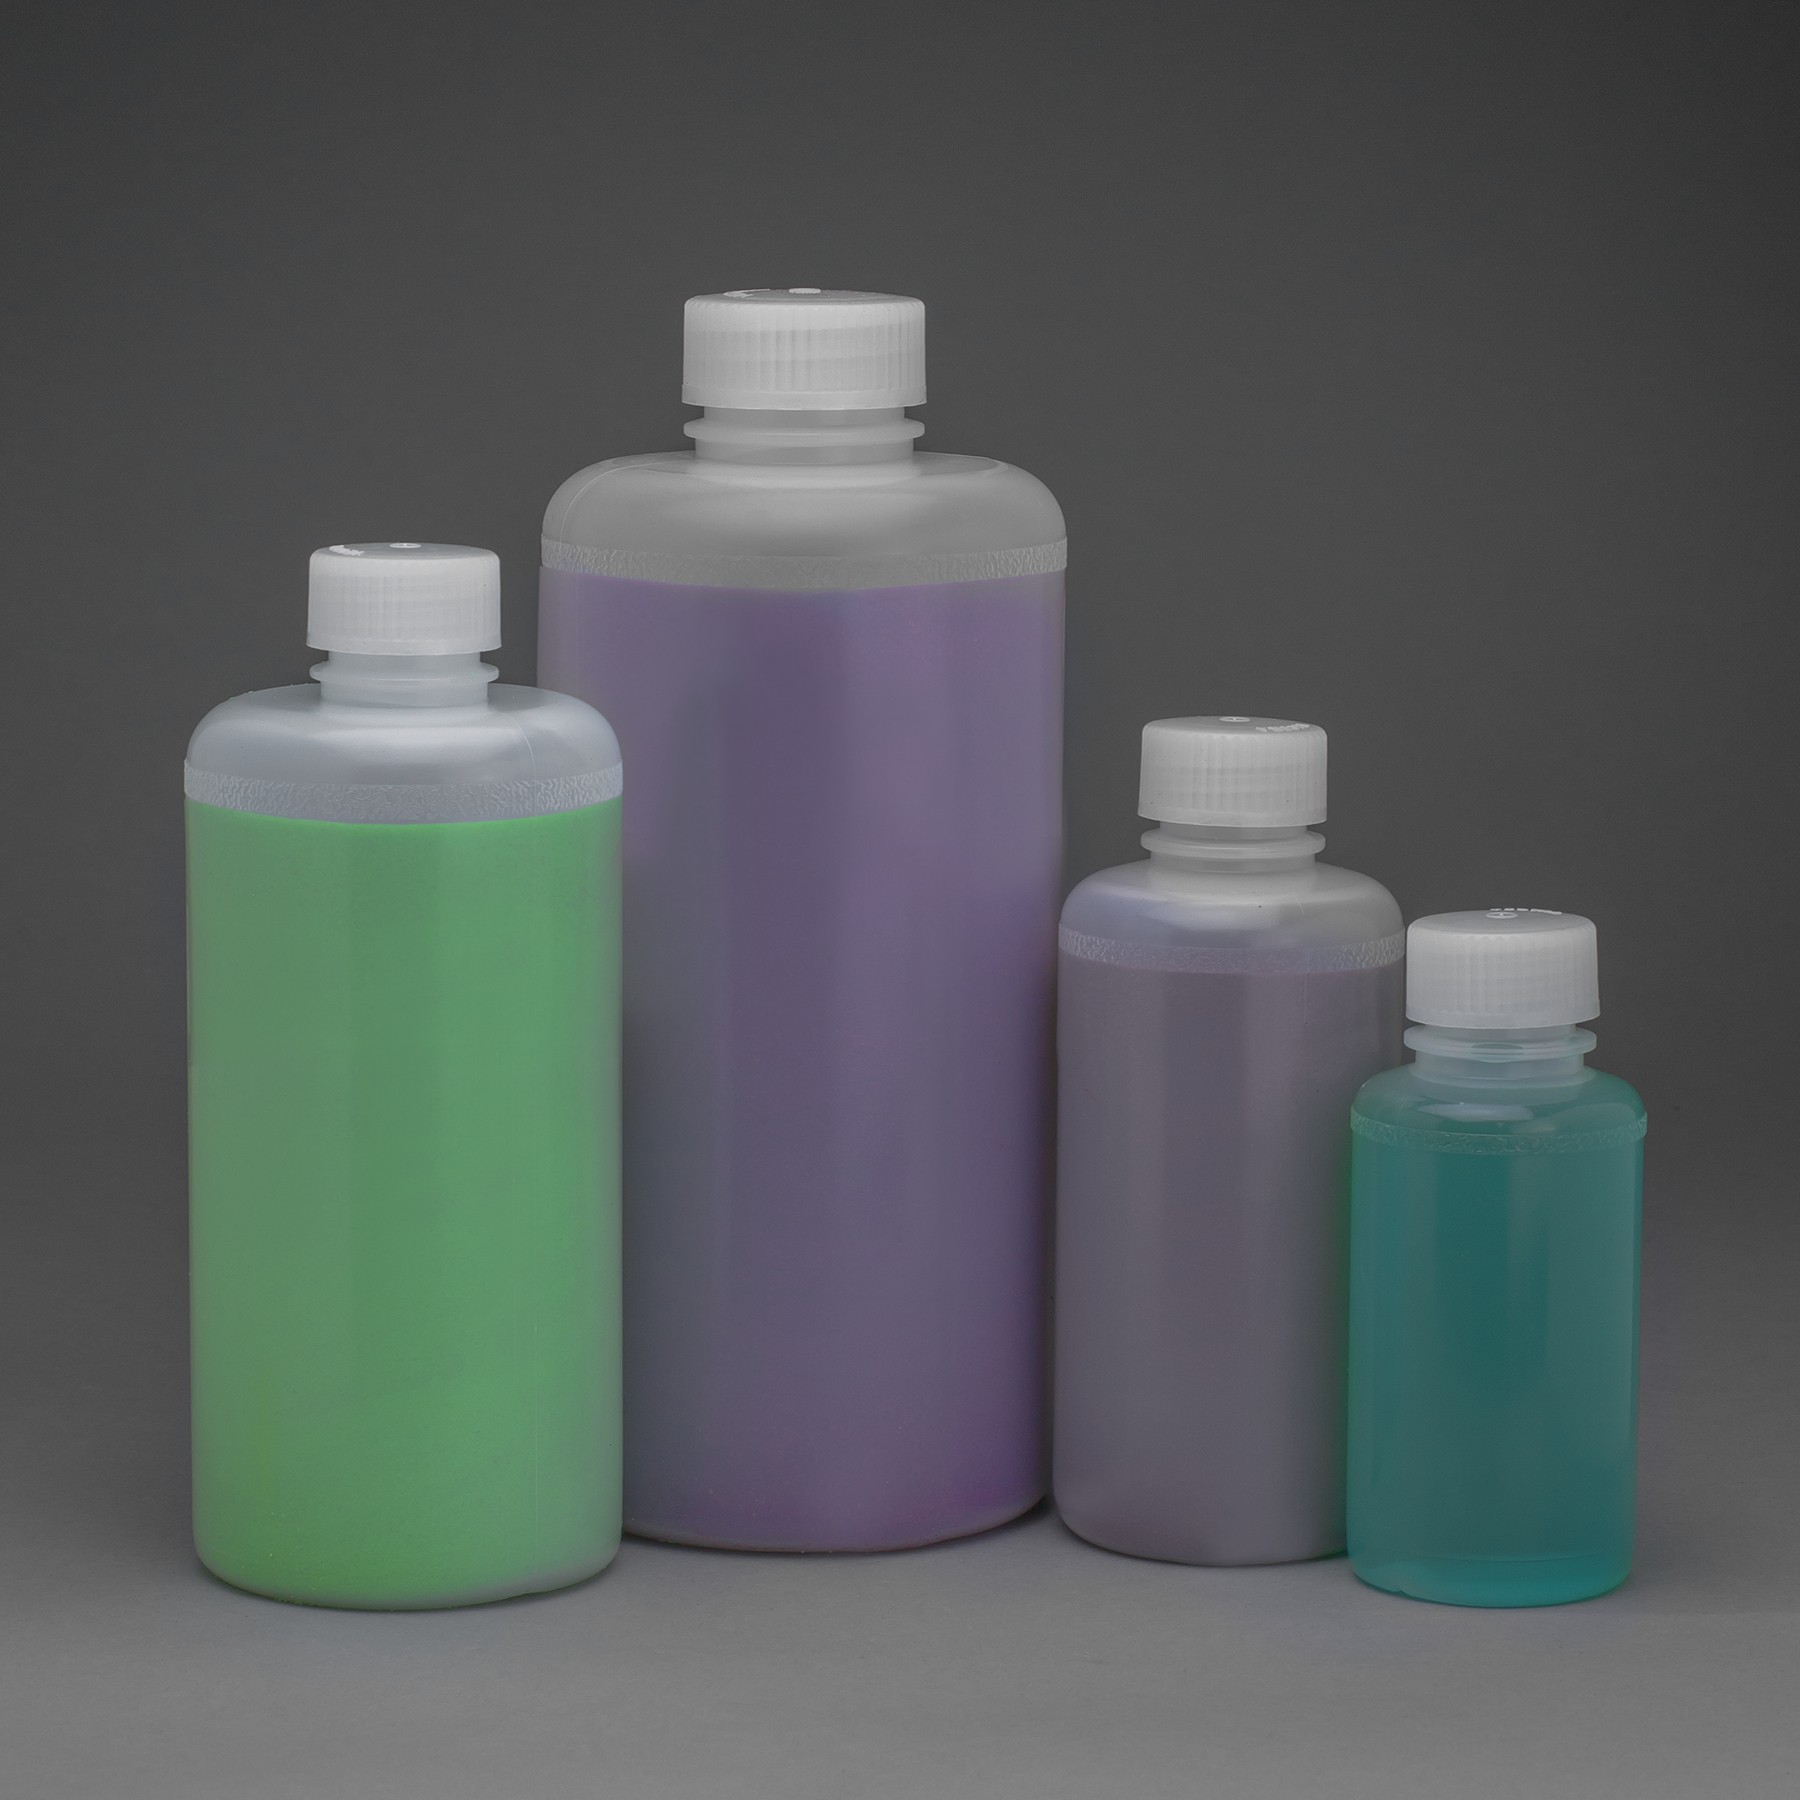 Precisionware Narrow-Mouth Bottles – Low-Density Polyethylene